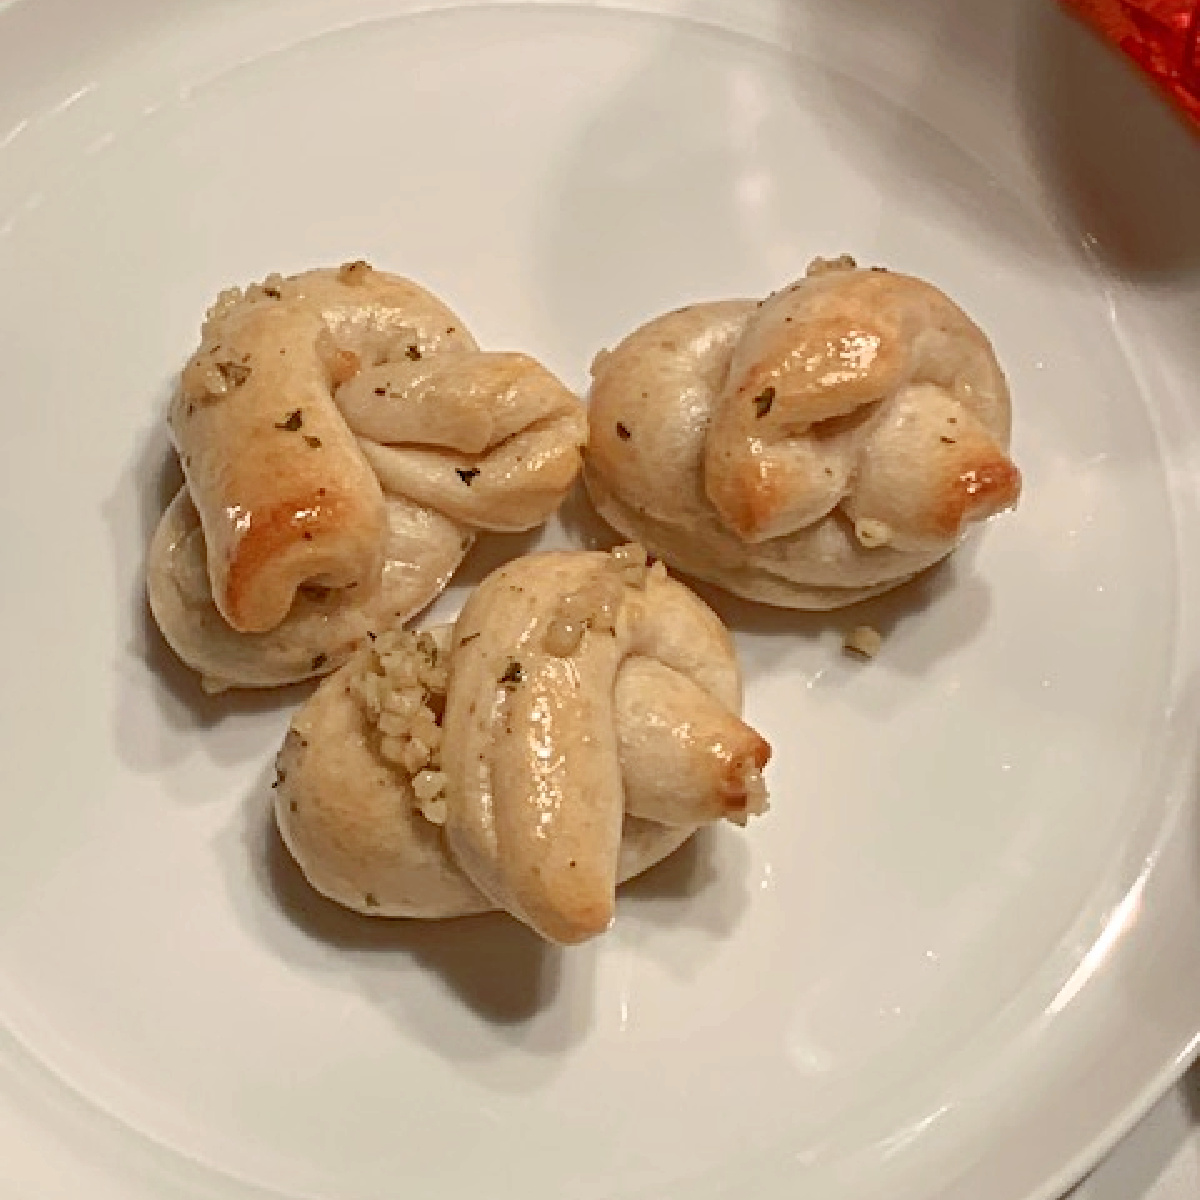 Three garlic knots on a plate.